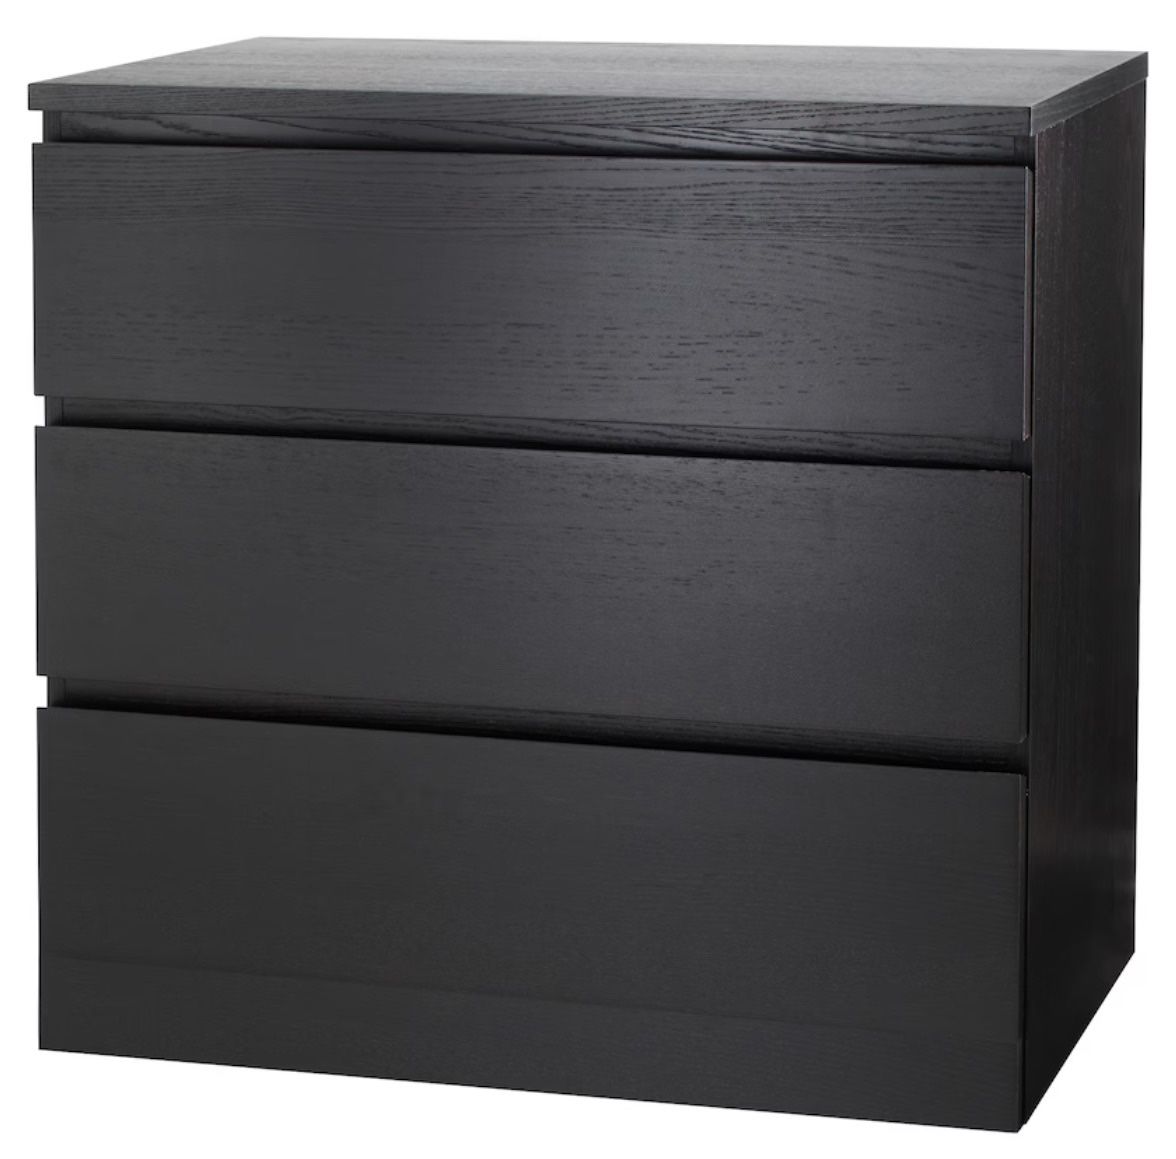 IKEA MALM 3-drawer chest